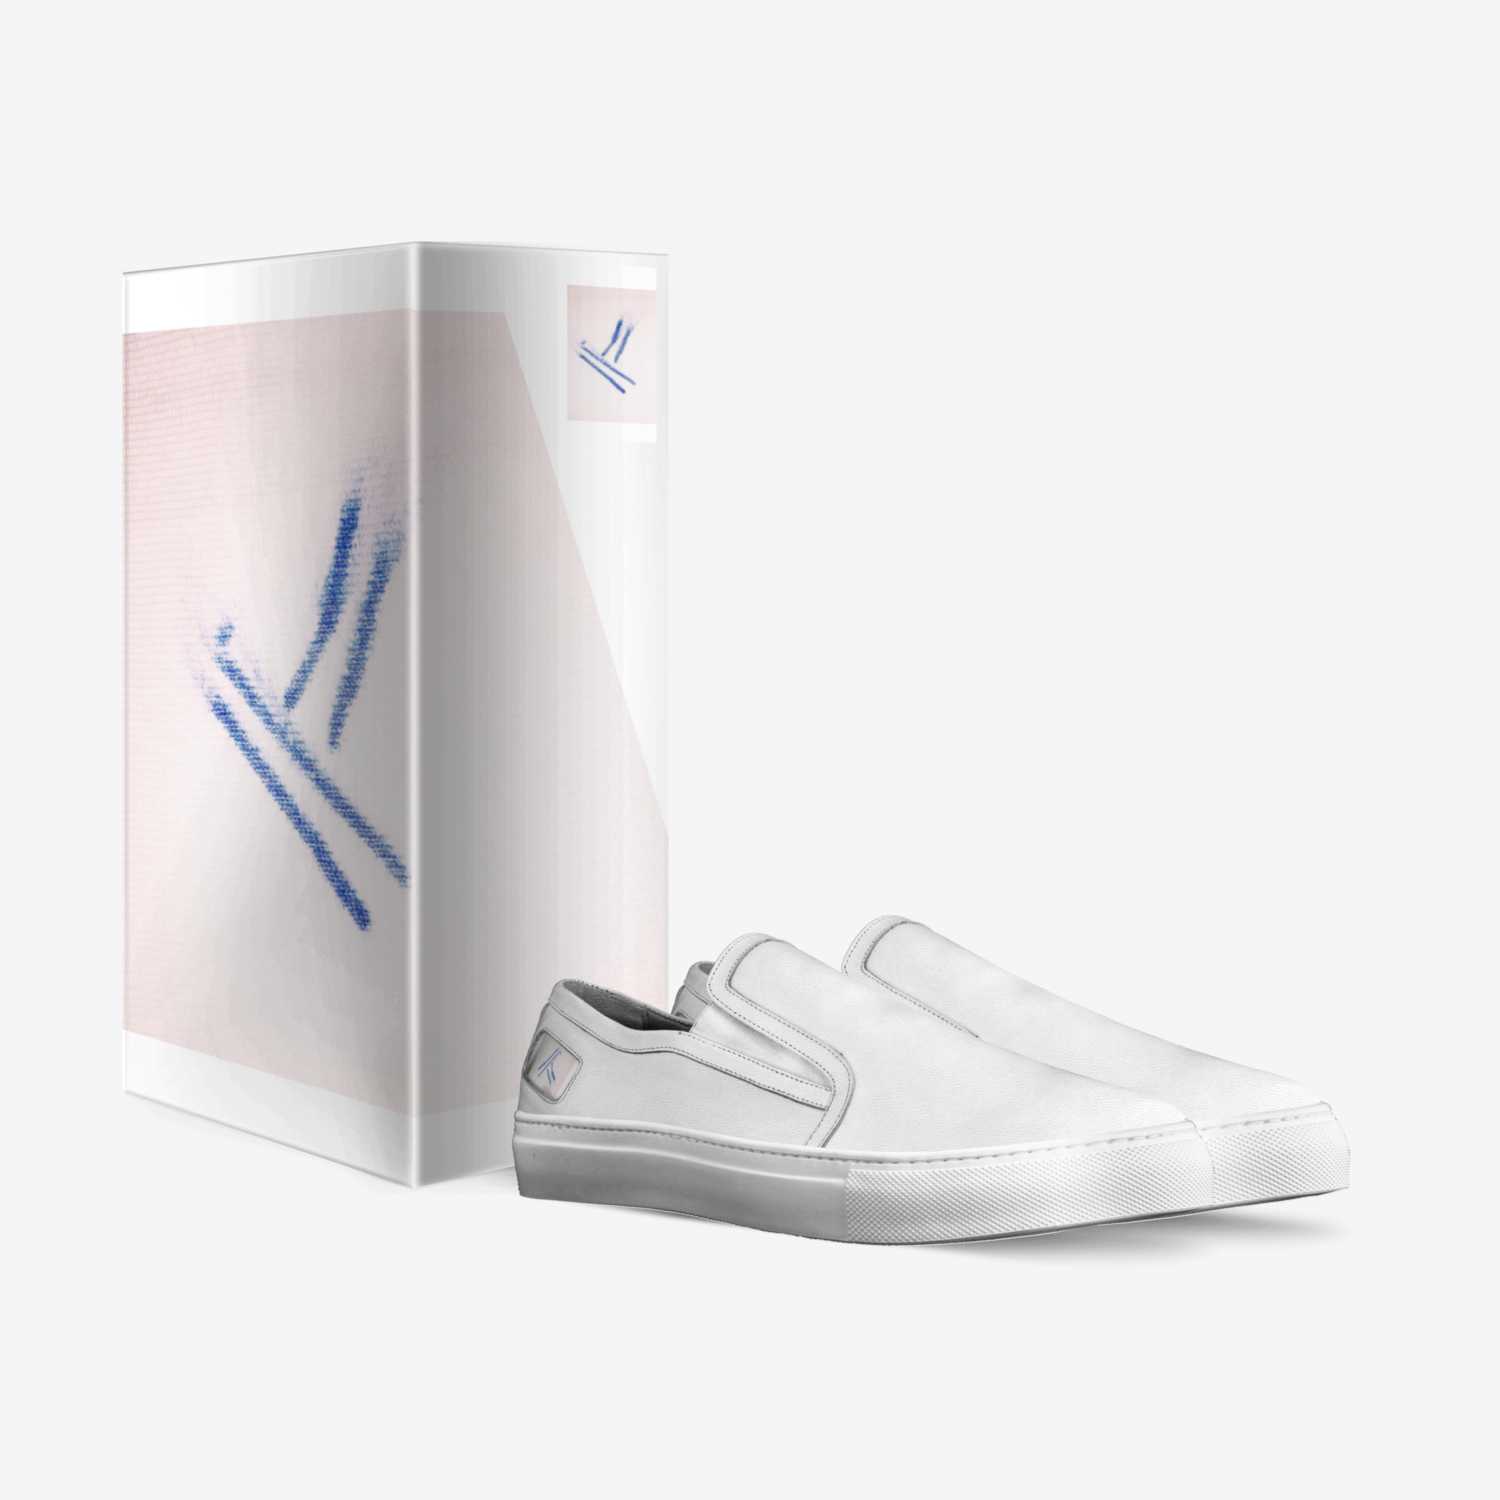 o n e w a v e 5 custom made in Italy shoes by Onewave5evaweno@gmail.com | Box view